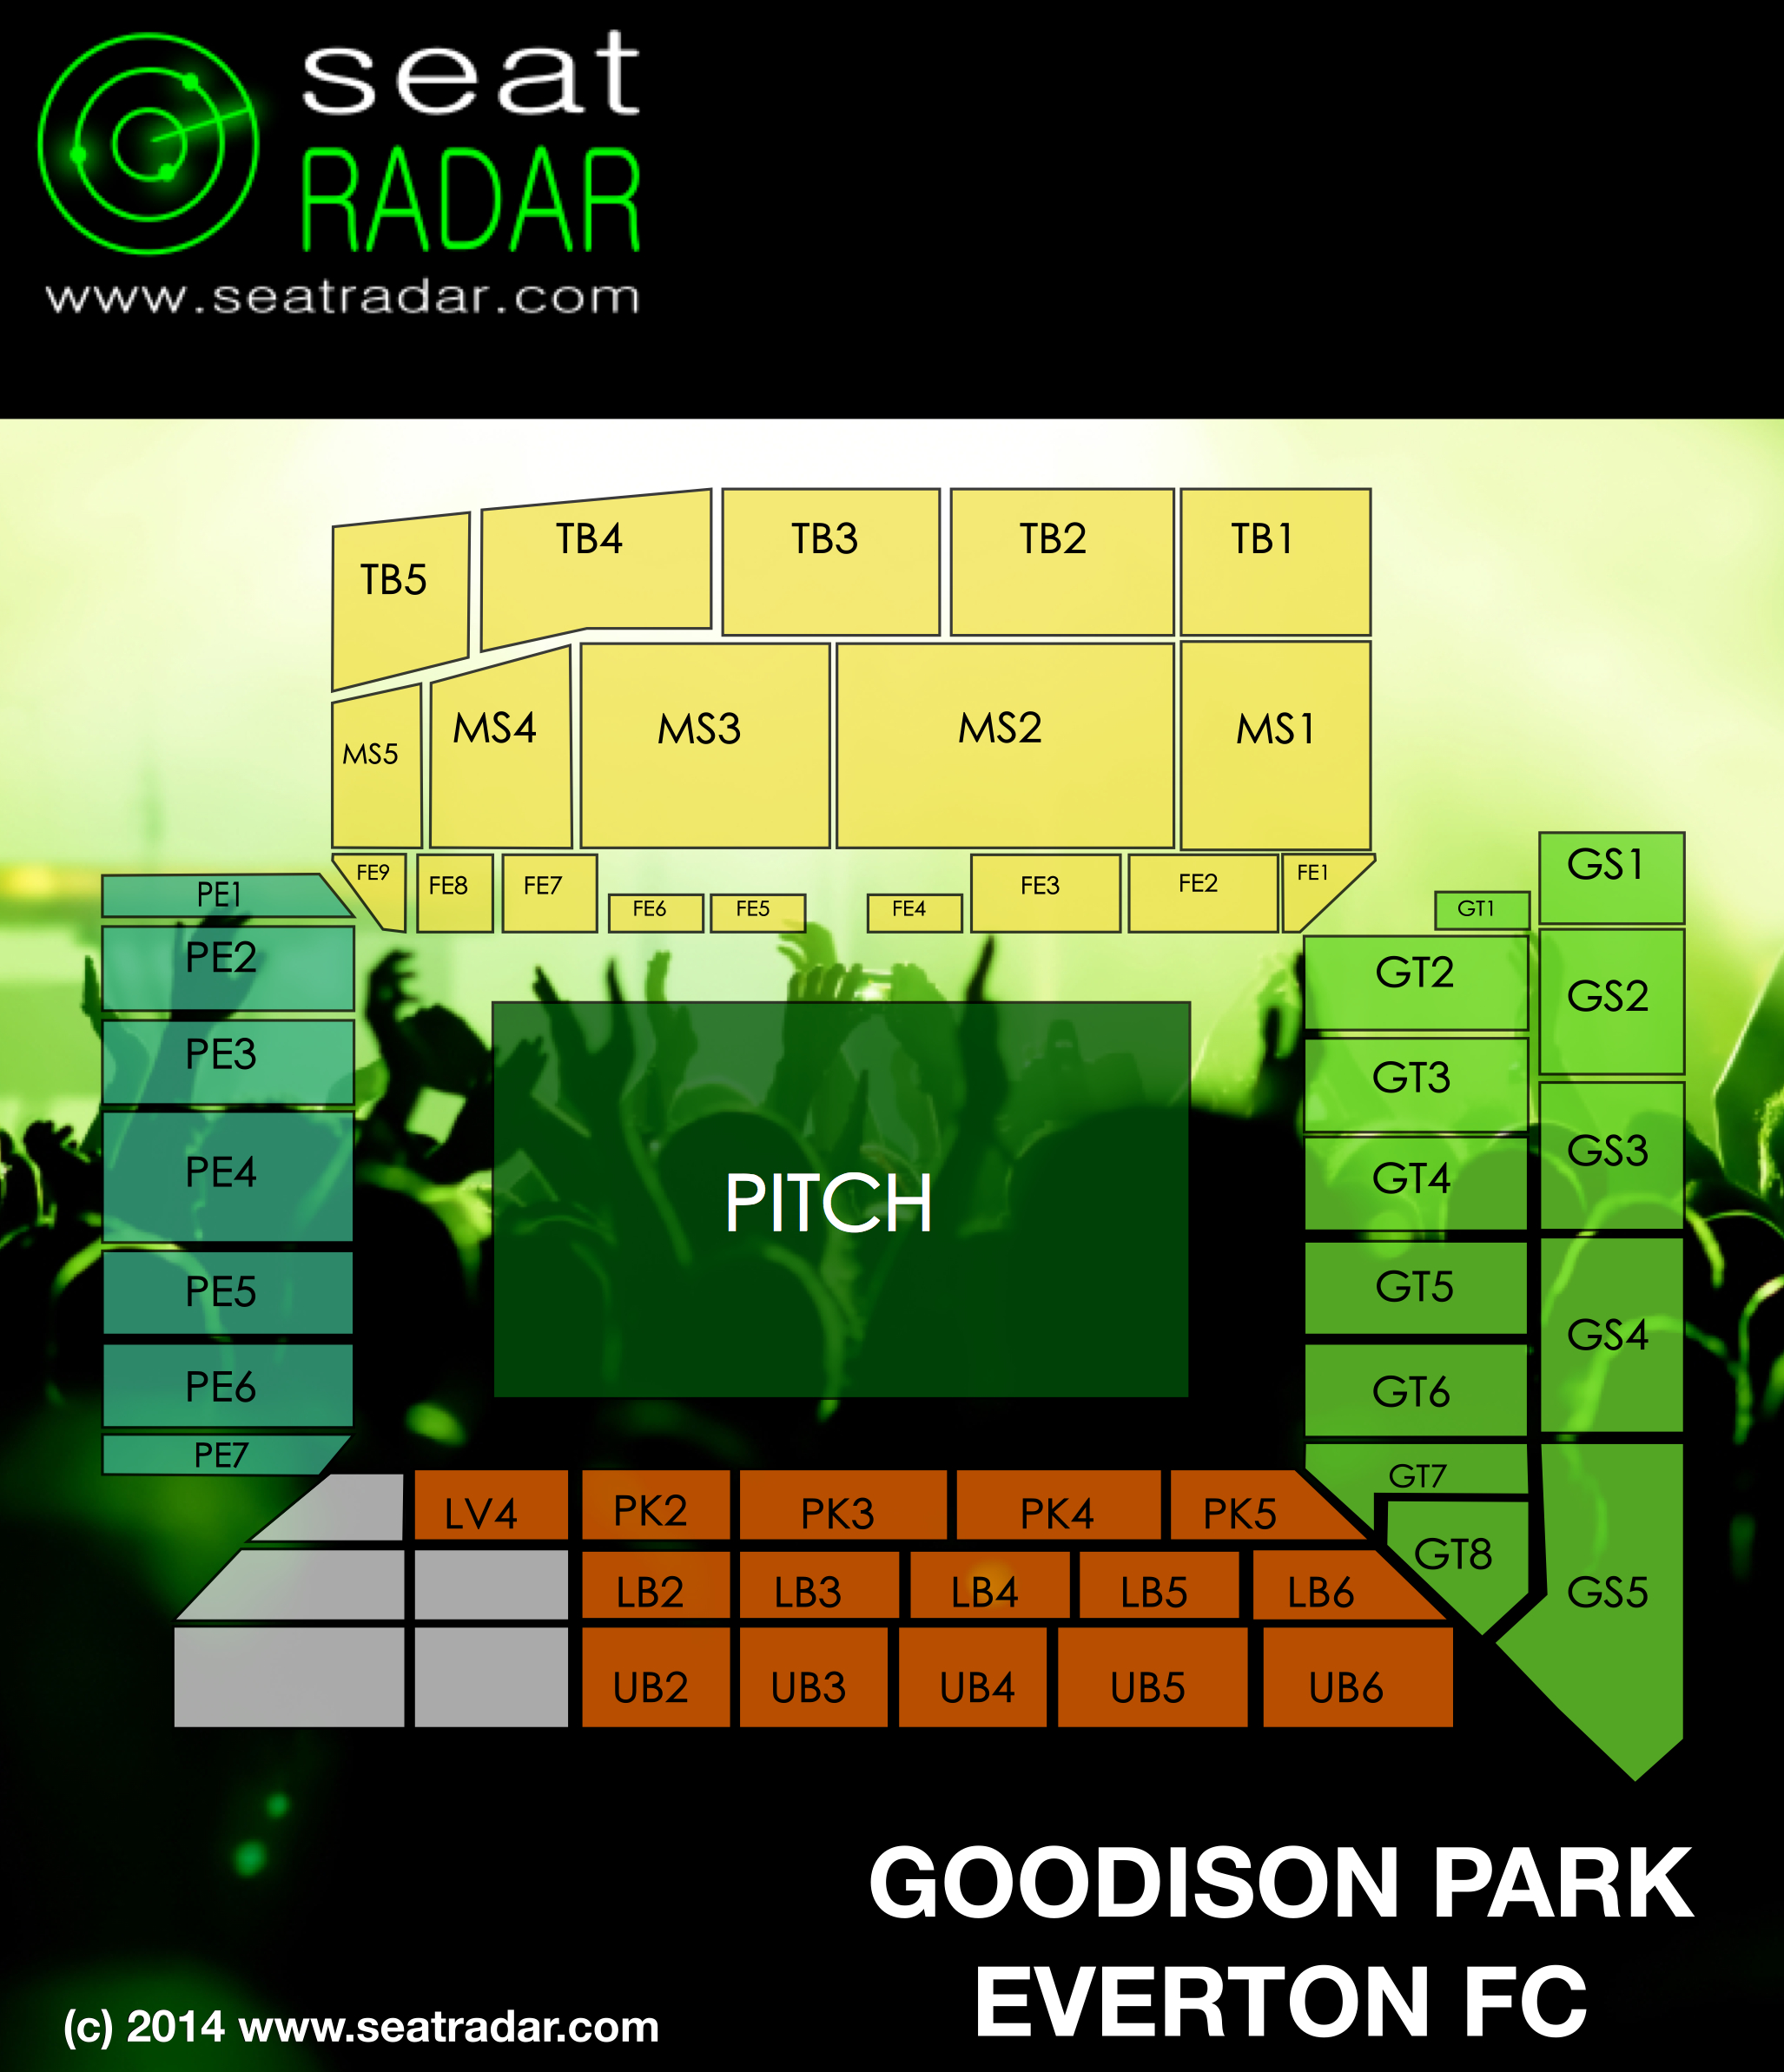 Goodison Park (Everton) Seating Plan